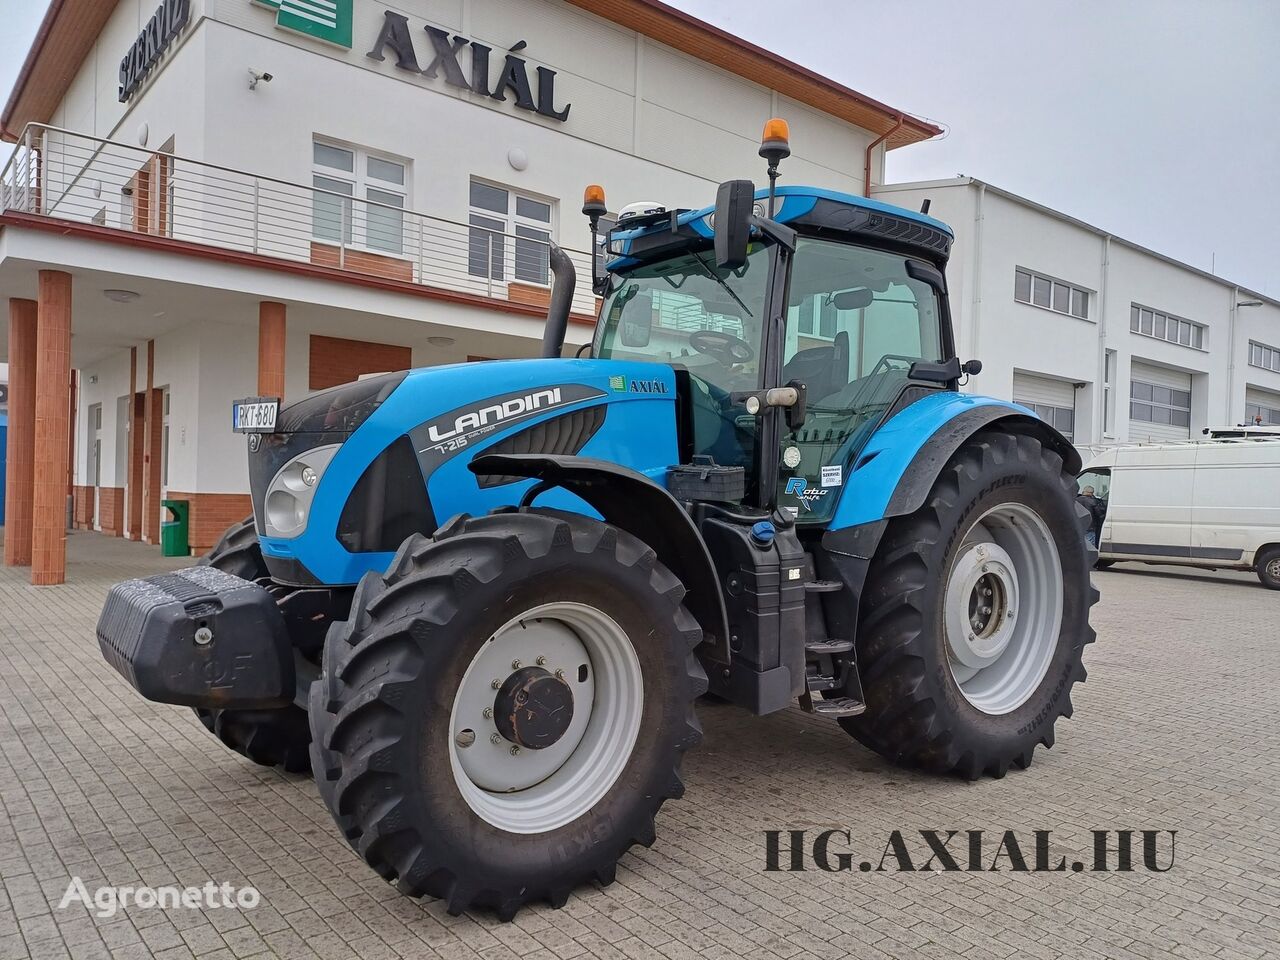 Landini 7-215 Tractor hjul traktor